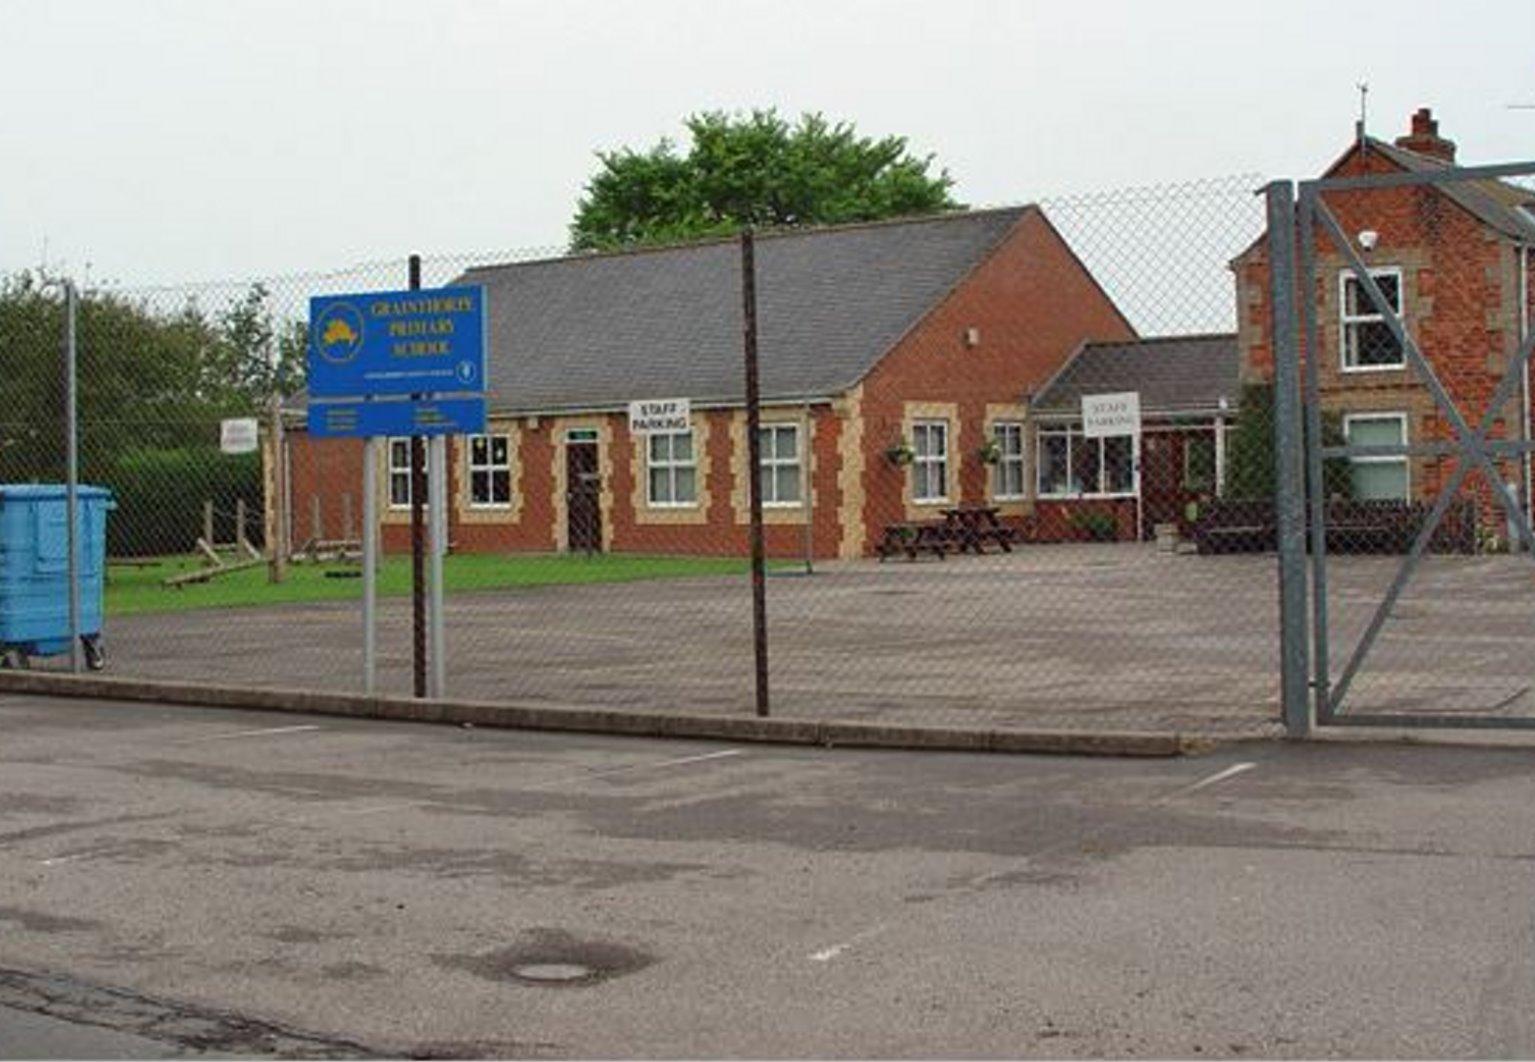 Grainthorpe Primary School